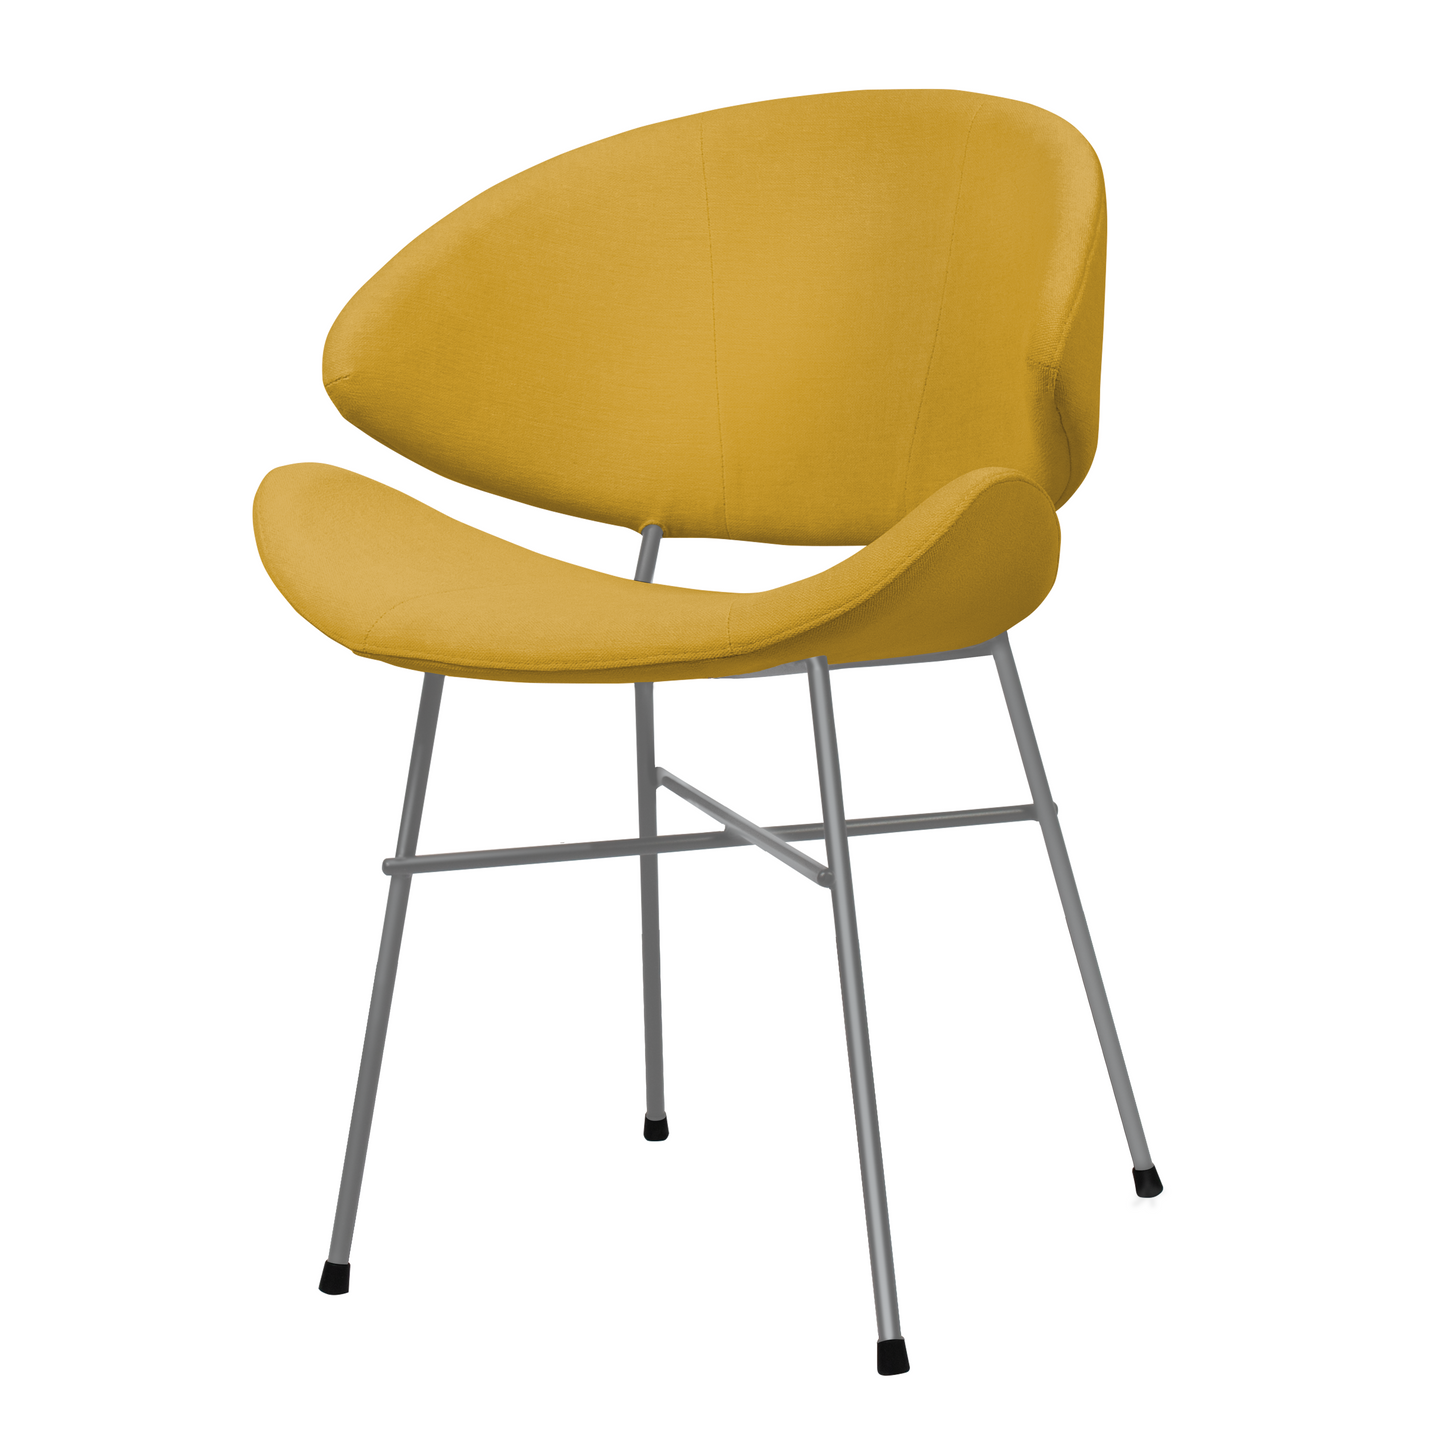 Chair Cheri Trend - Mustard